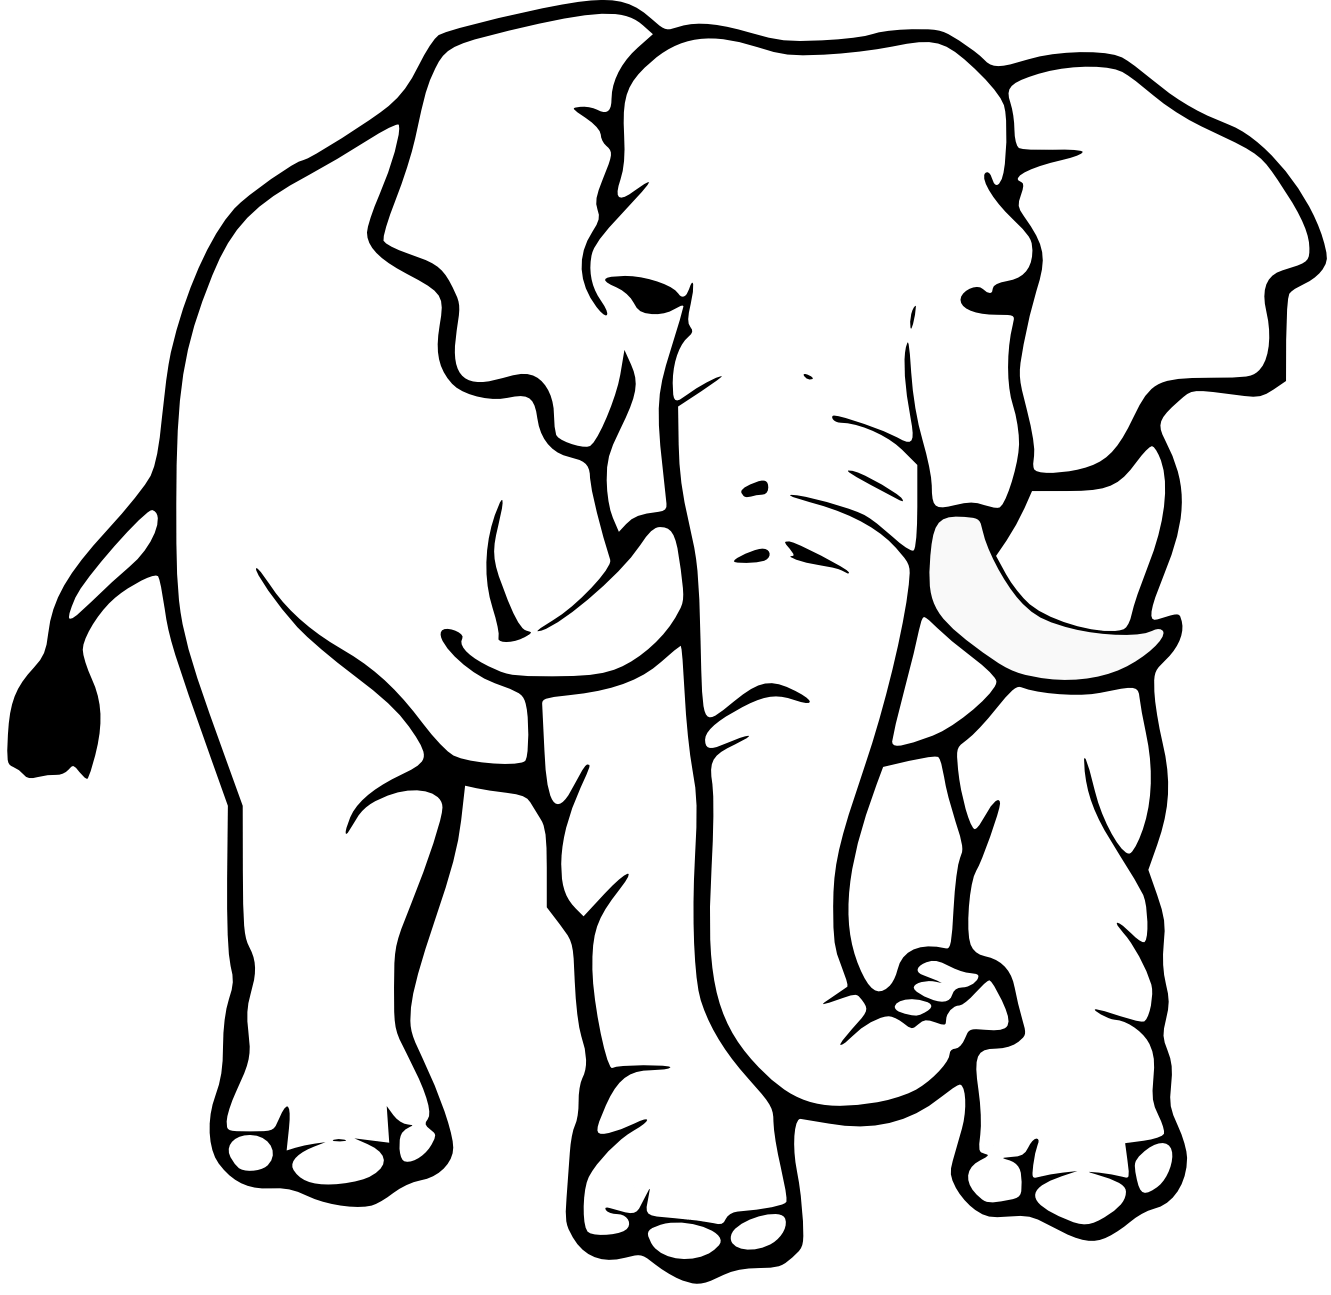 Black and White Elephant Logo - Free Black And White Elephants, Download Free Clip Art, Free Clip